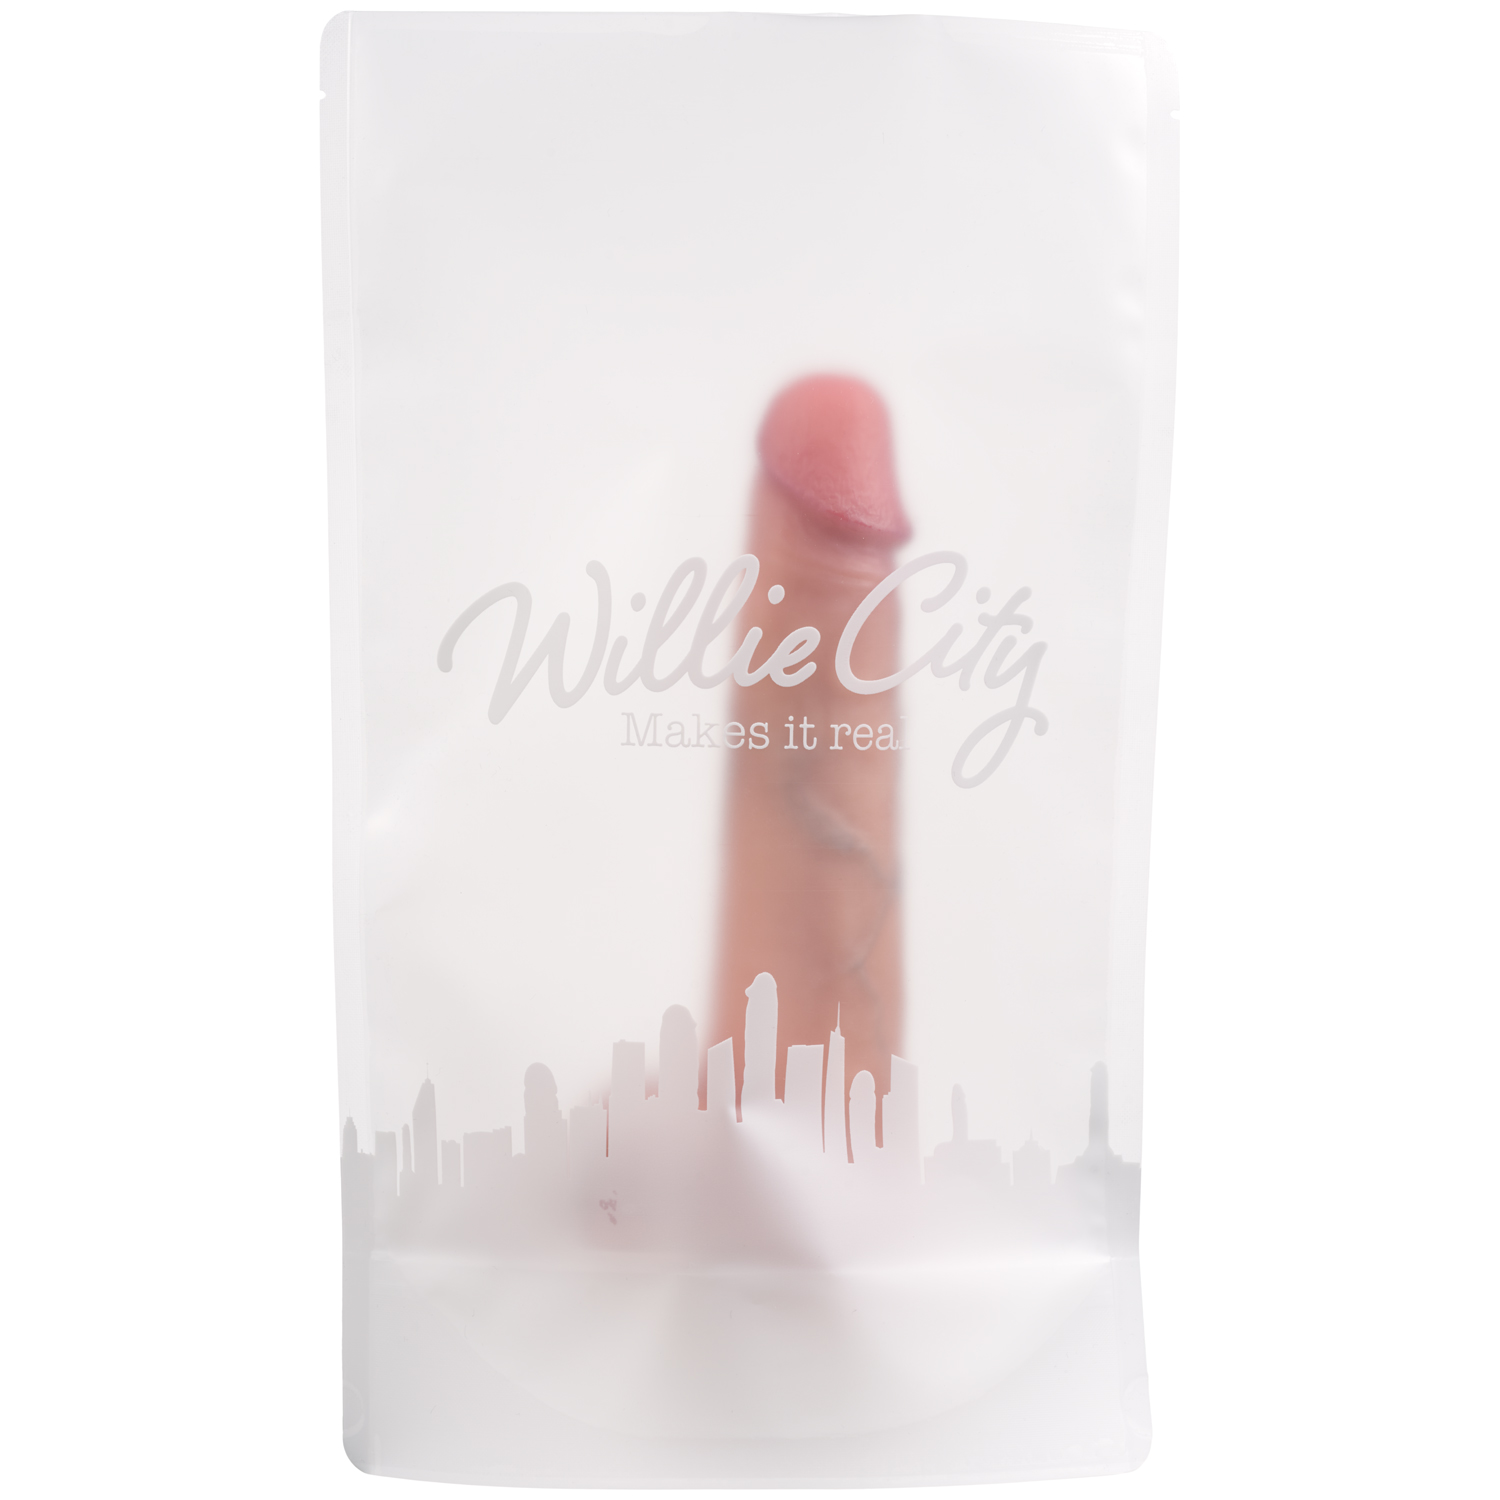 Willie City Willie City Super Realistic Silikondildo 21,5 cm - Beige